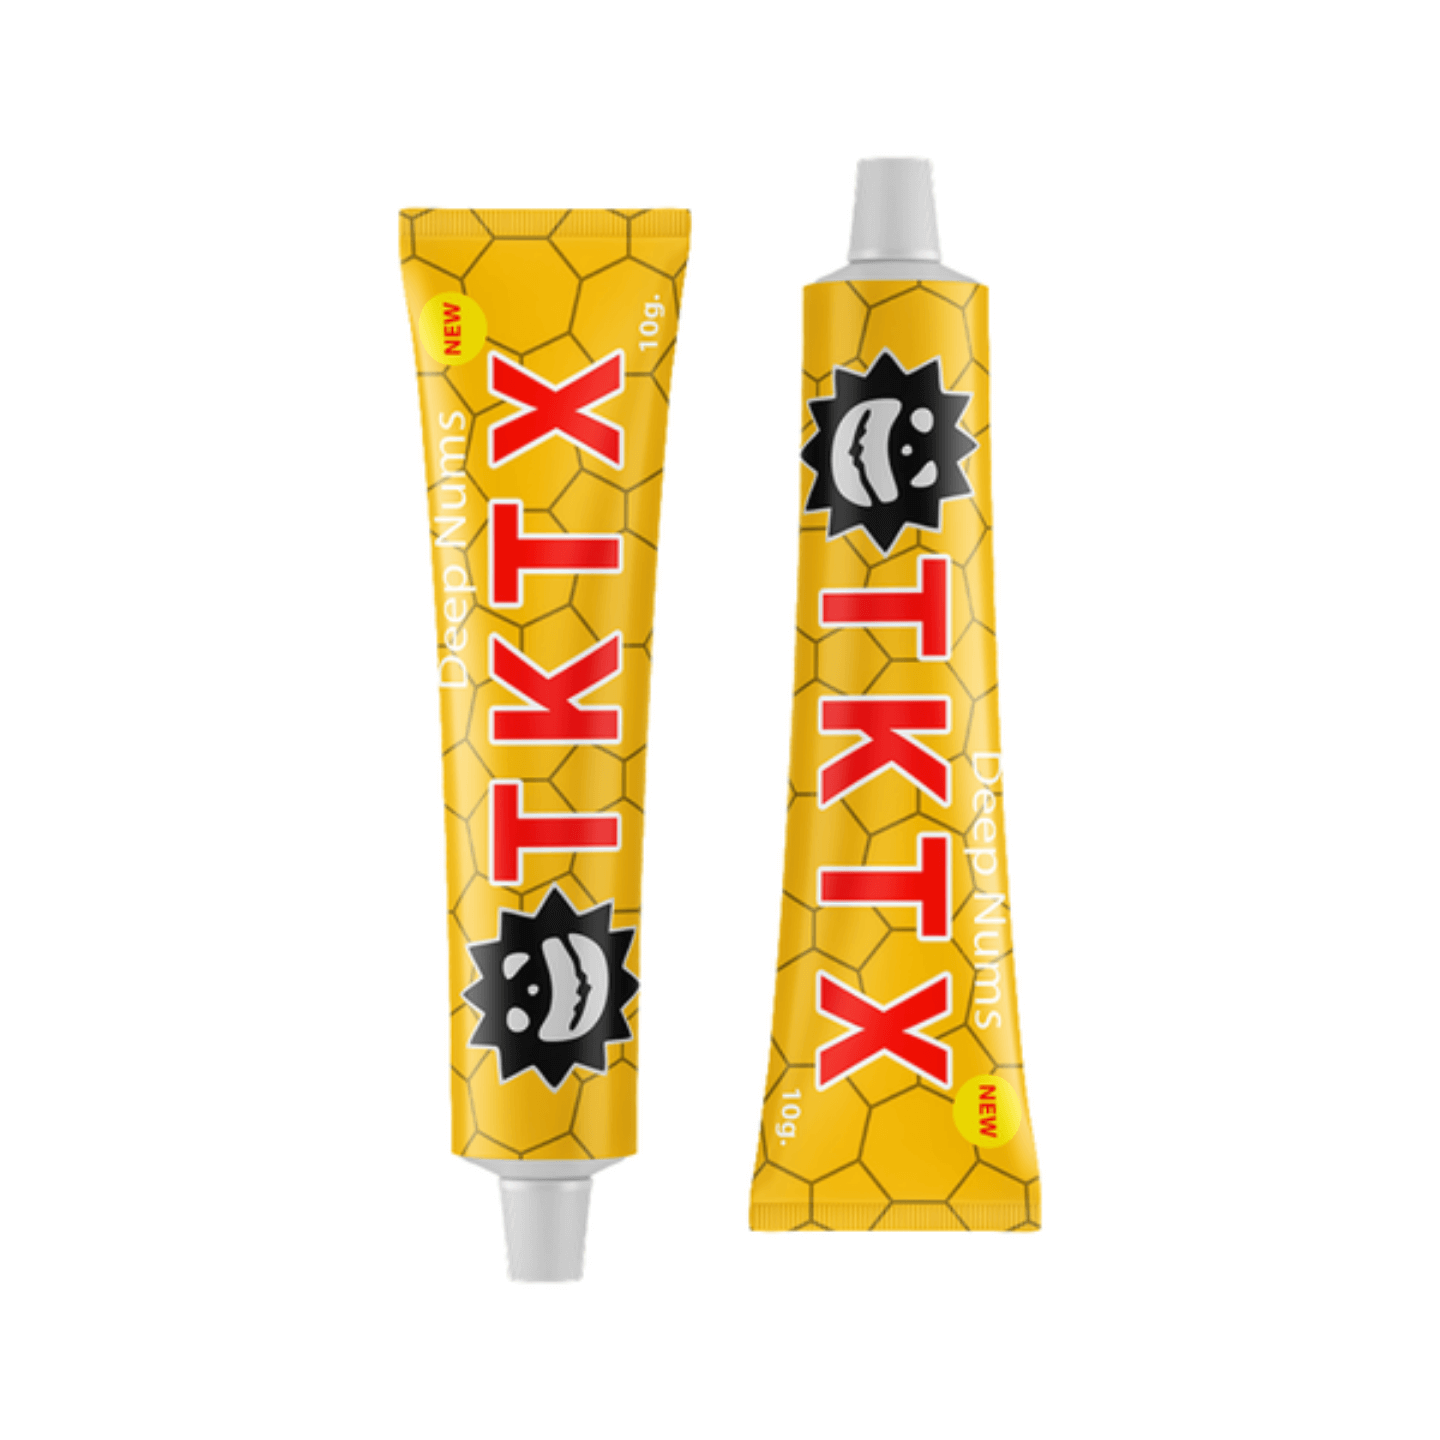 TKTX verdovingszalf crème Geel 40% 3 Halen = 2 Betalen